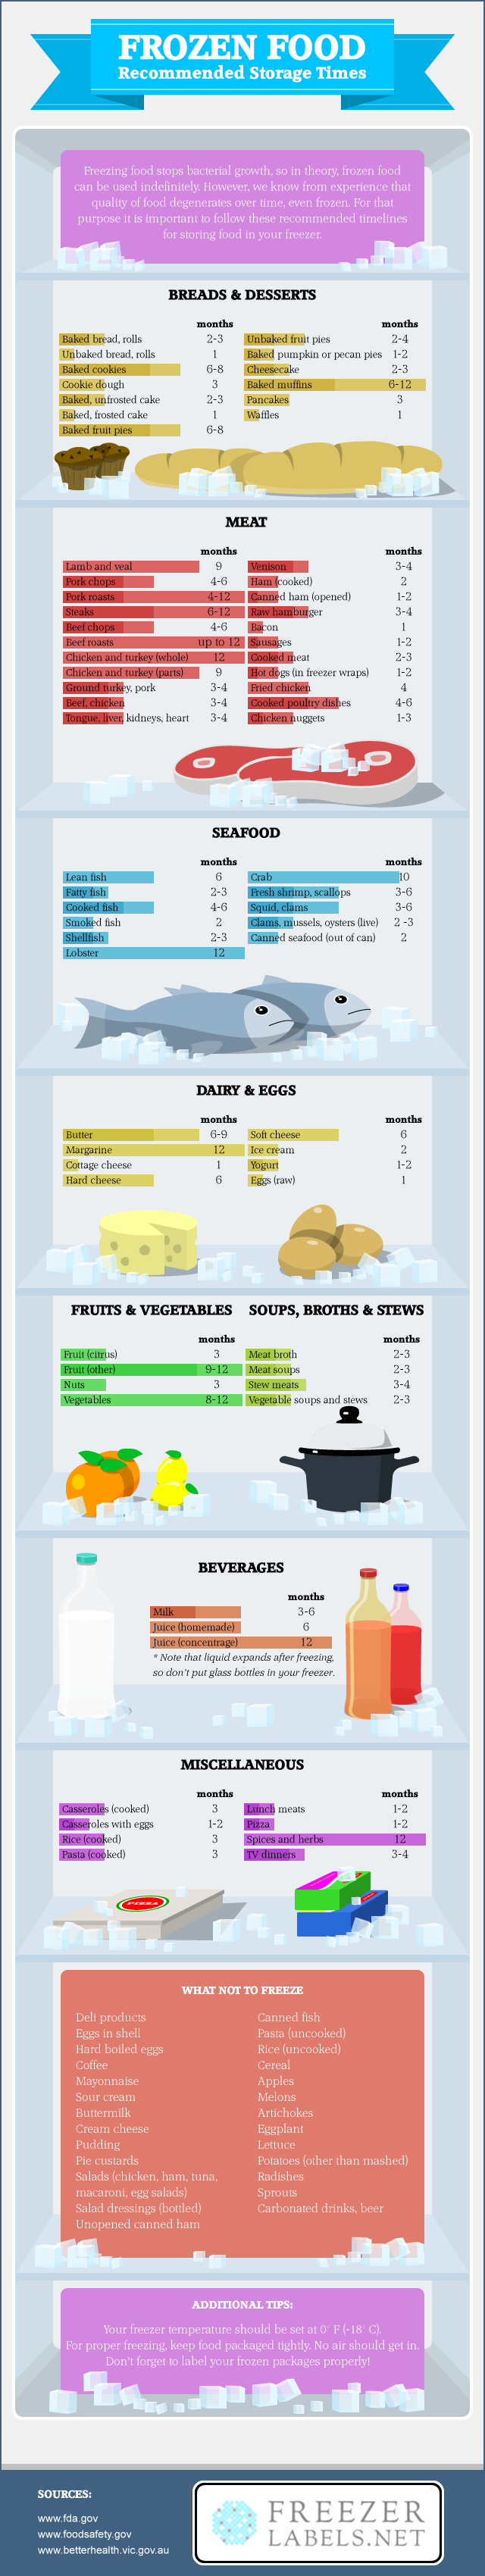 Recommended Storage Times Frozen Food | PreparednessMama